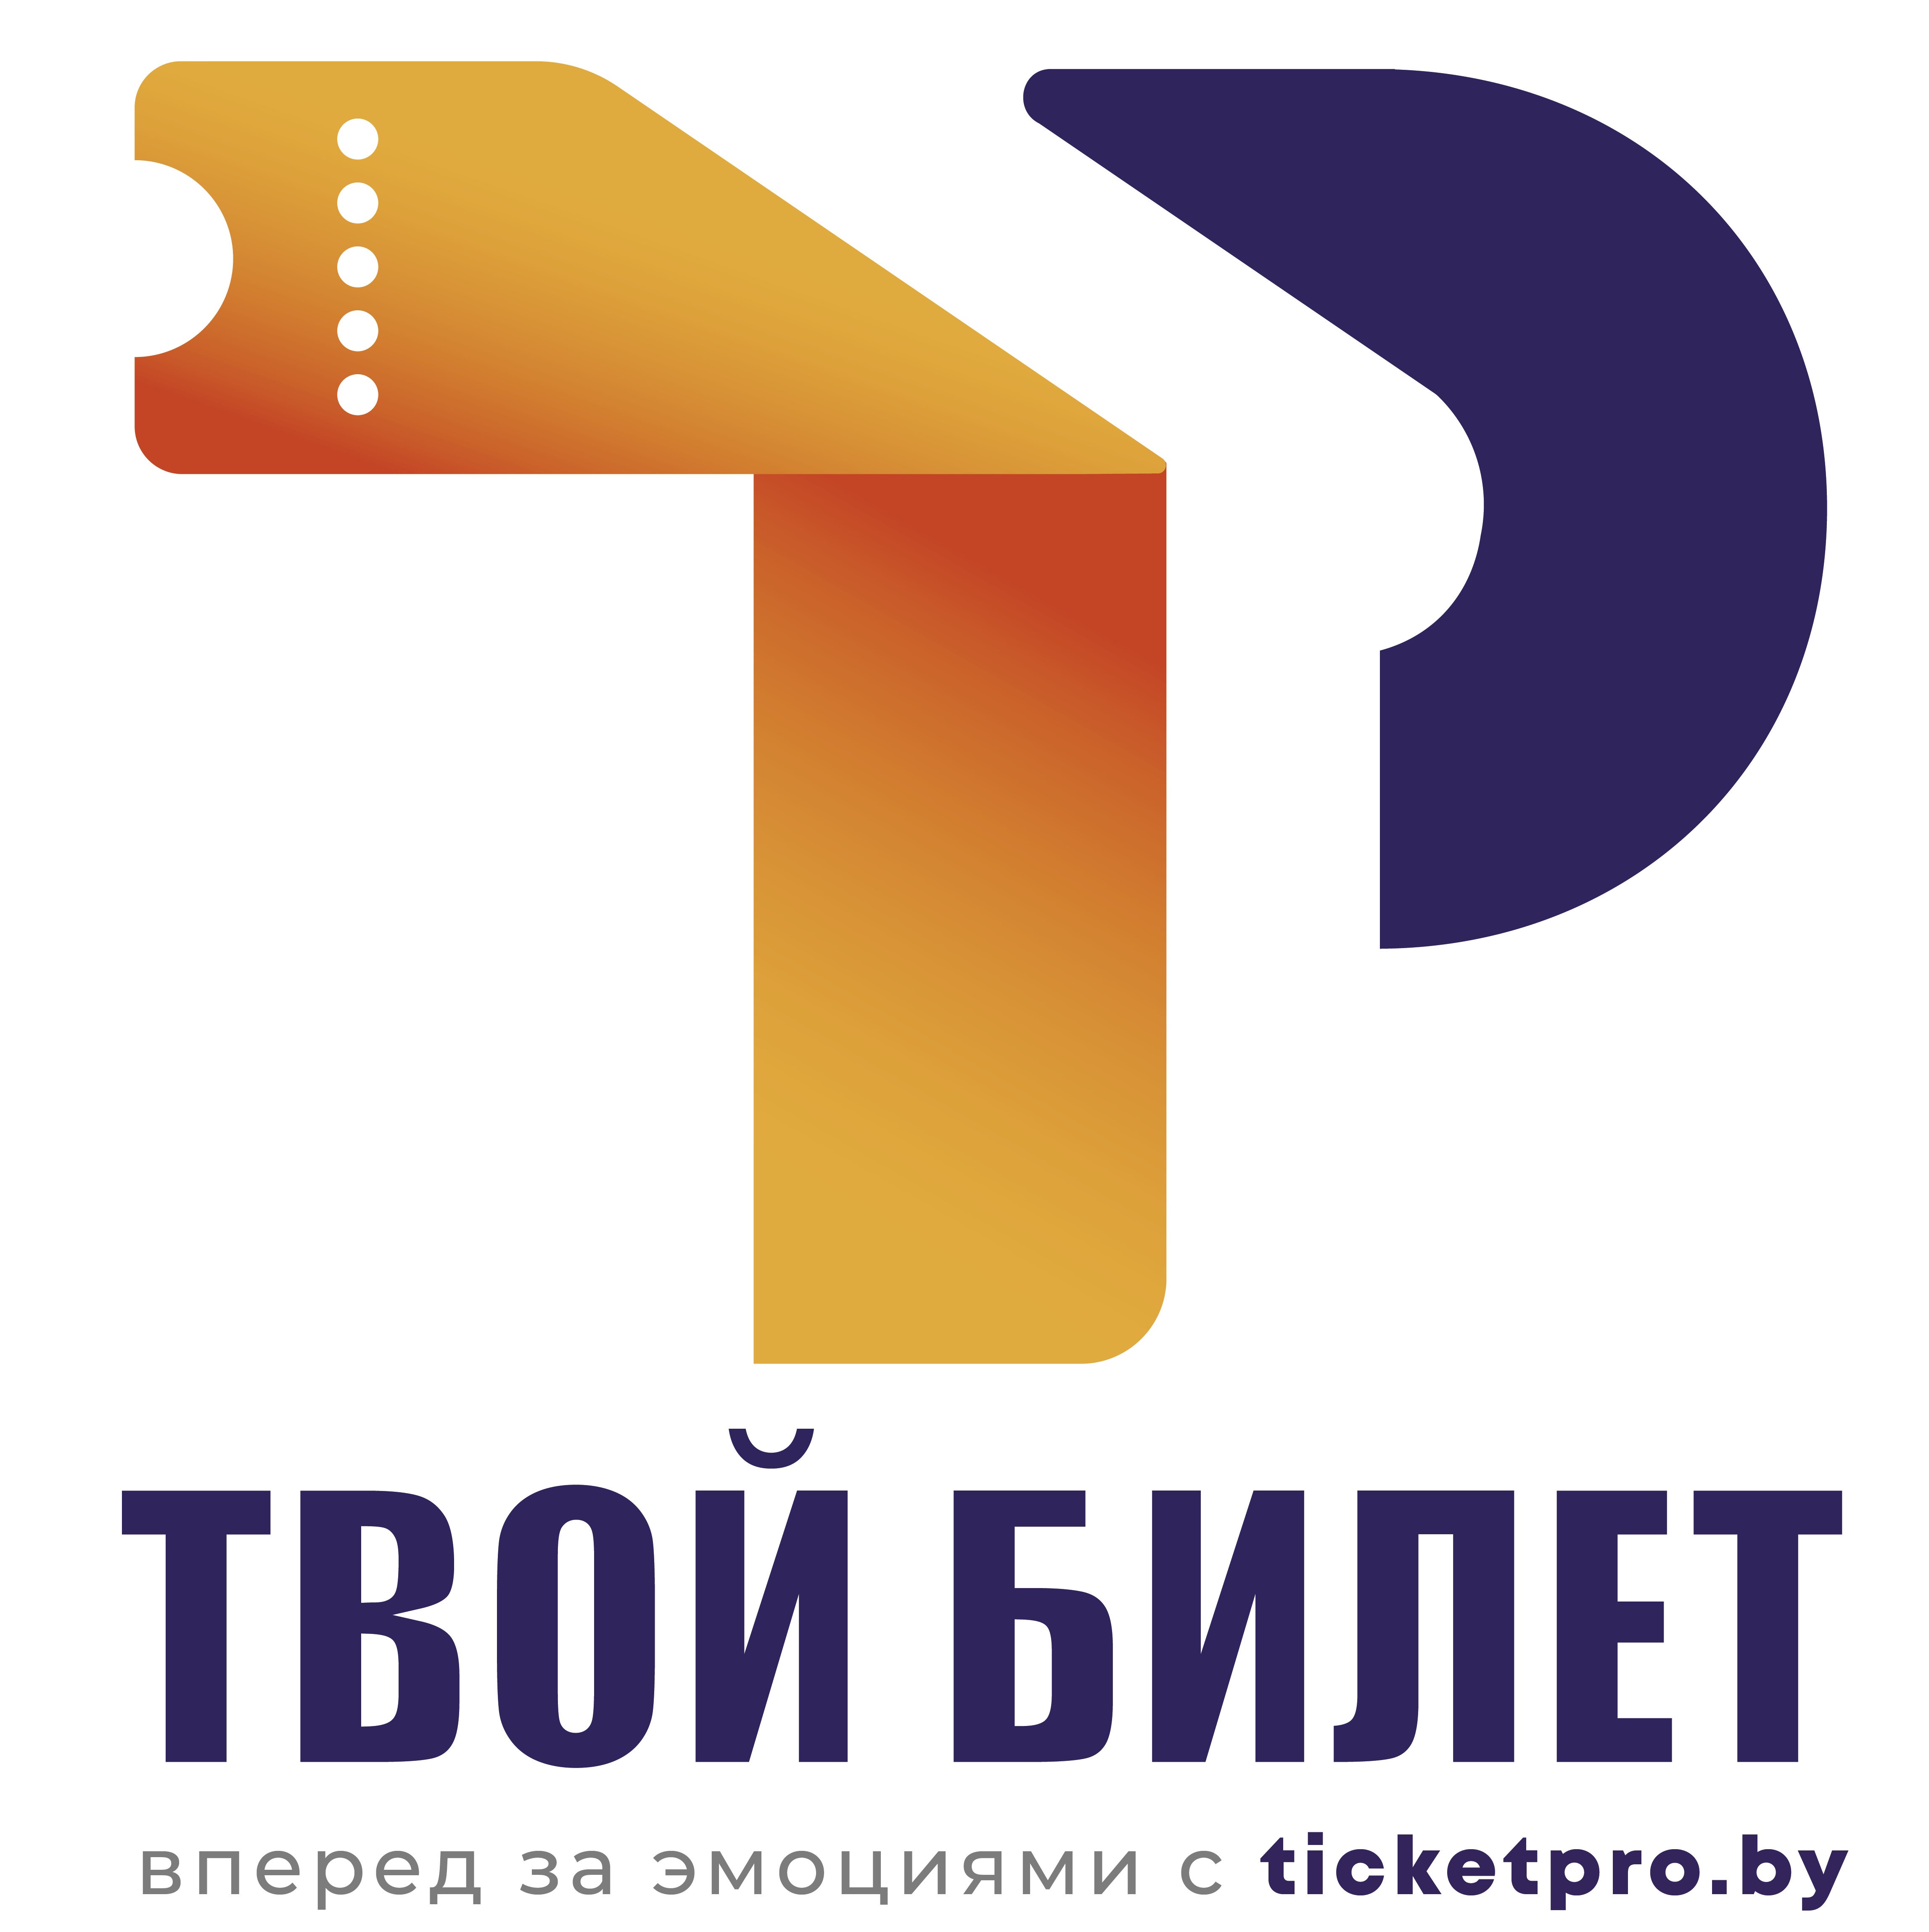 Ticketpro